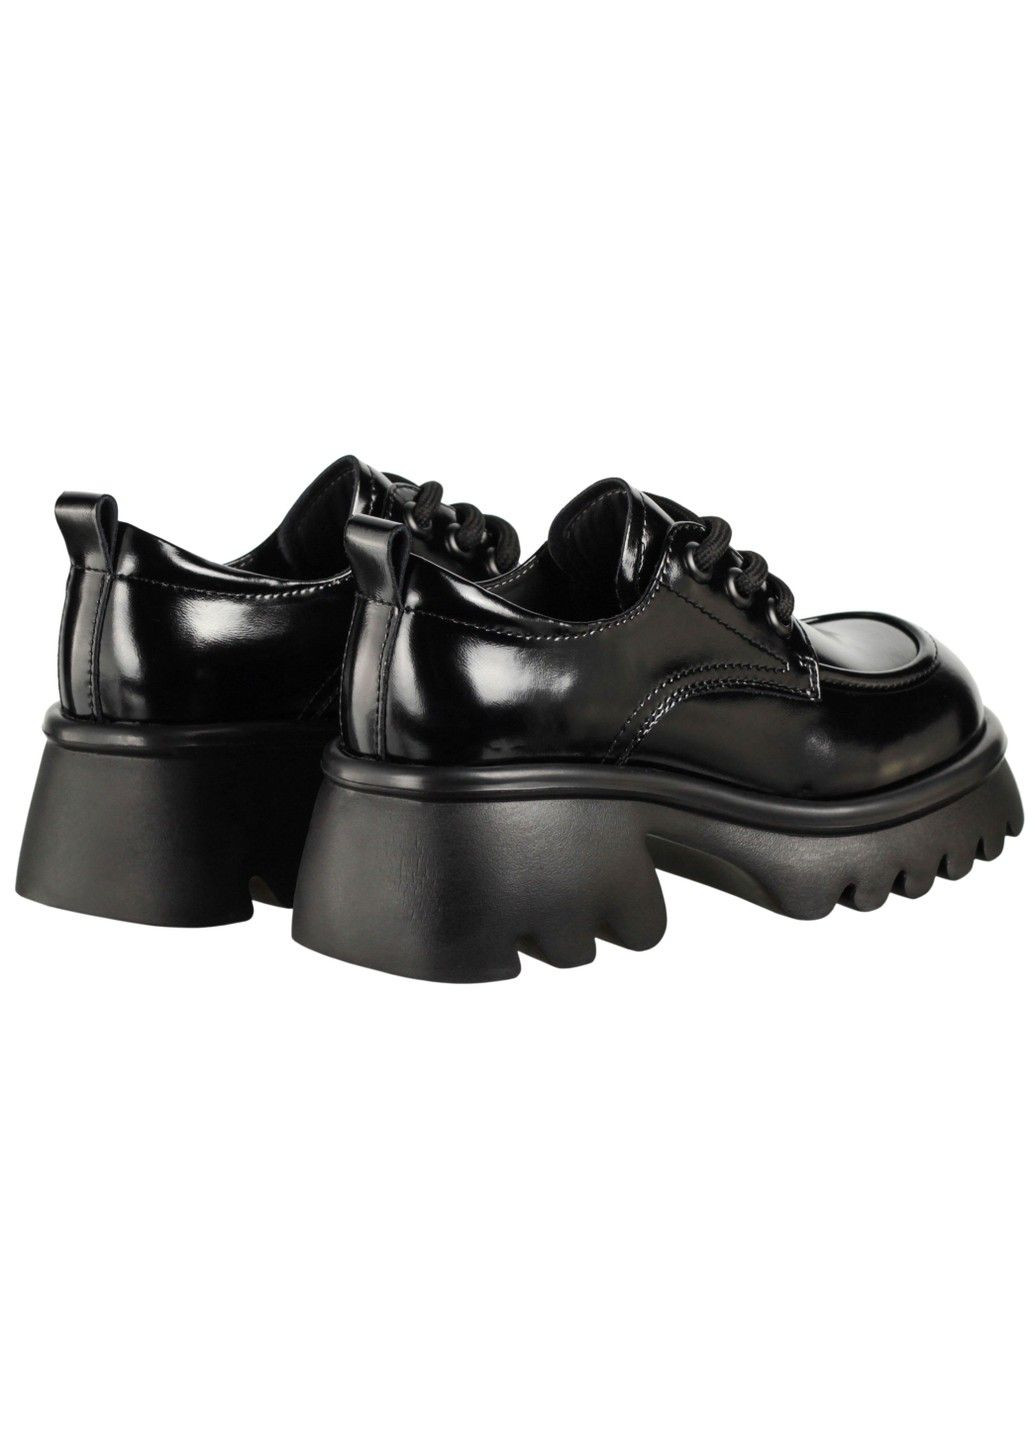 Женские туфли на низком ходу 1100025 Buts на среднем каблуке